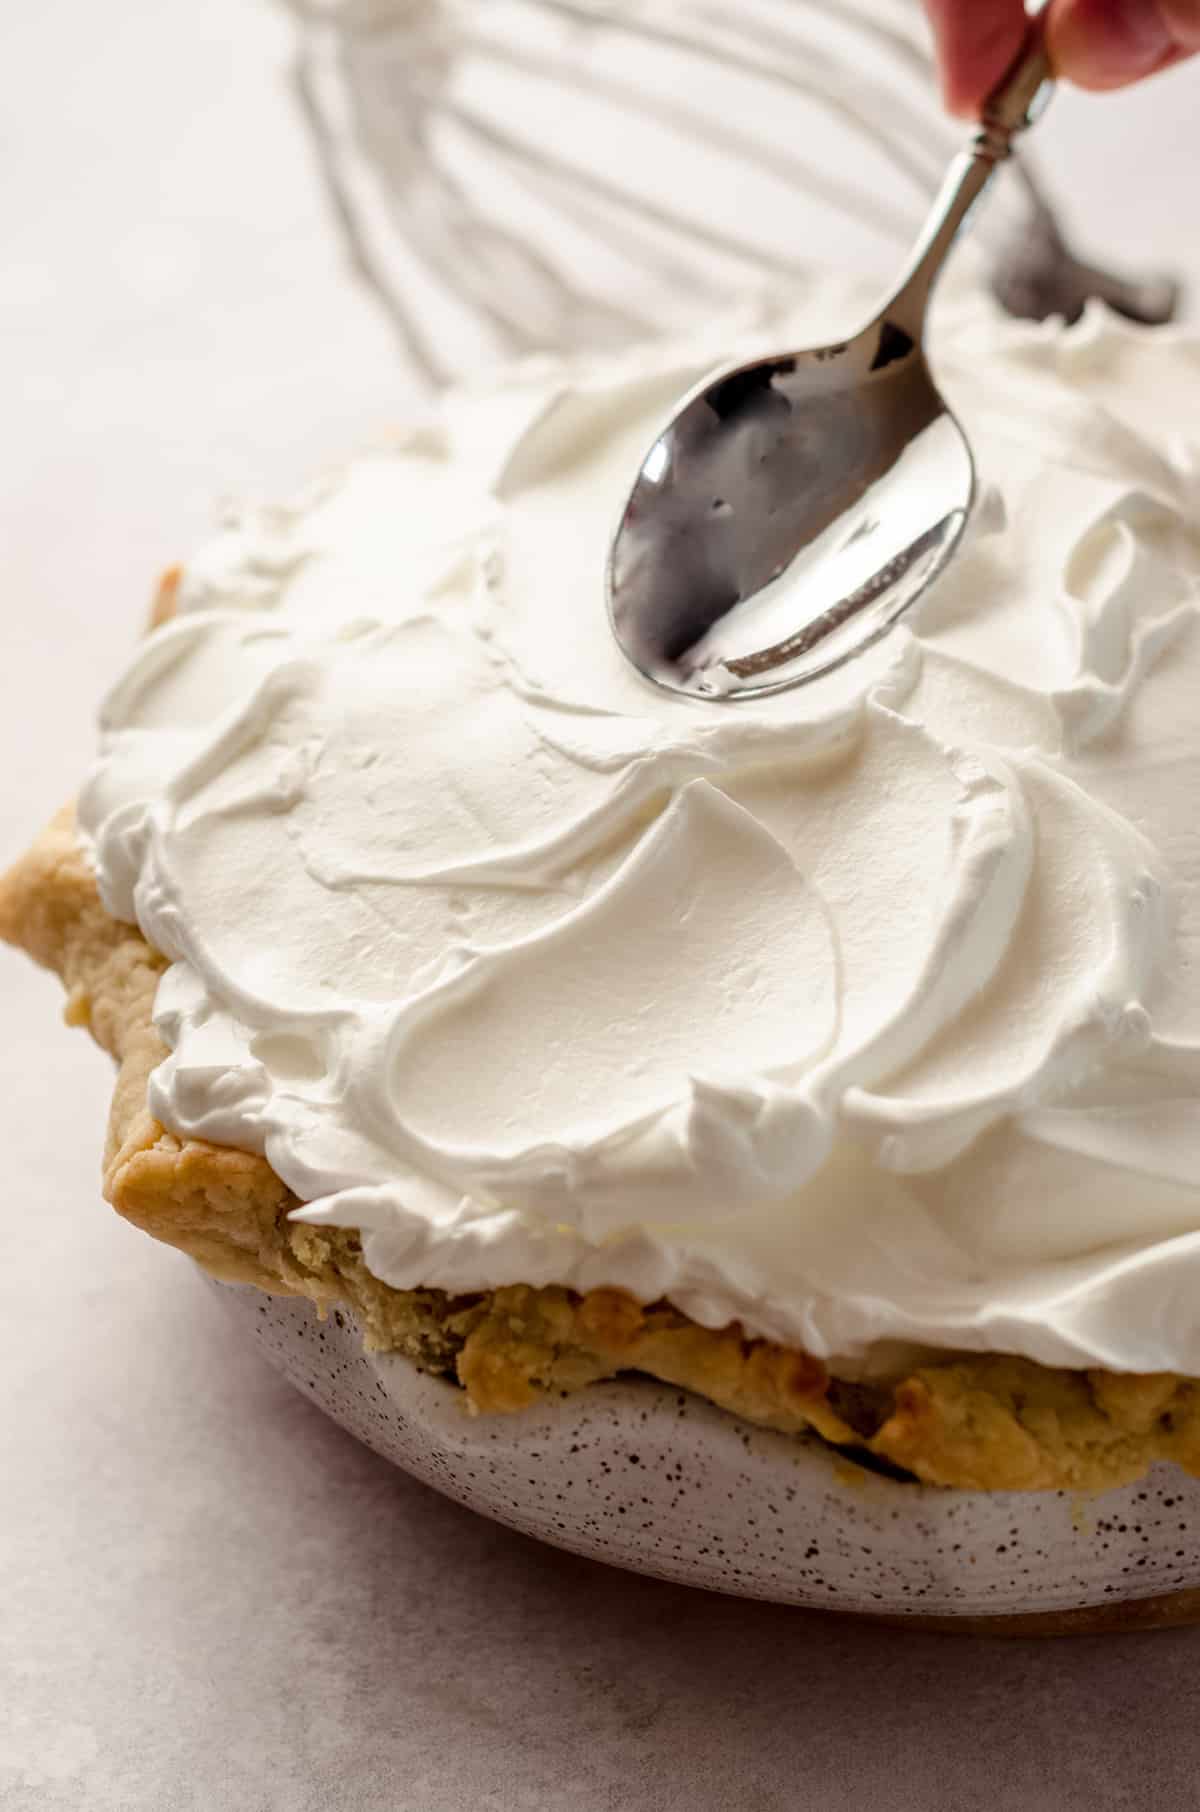 Using a spoon to create dramatic peaks for lemon meringue pie.